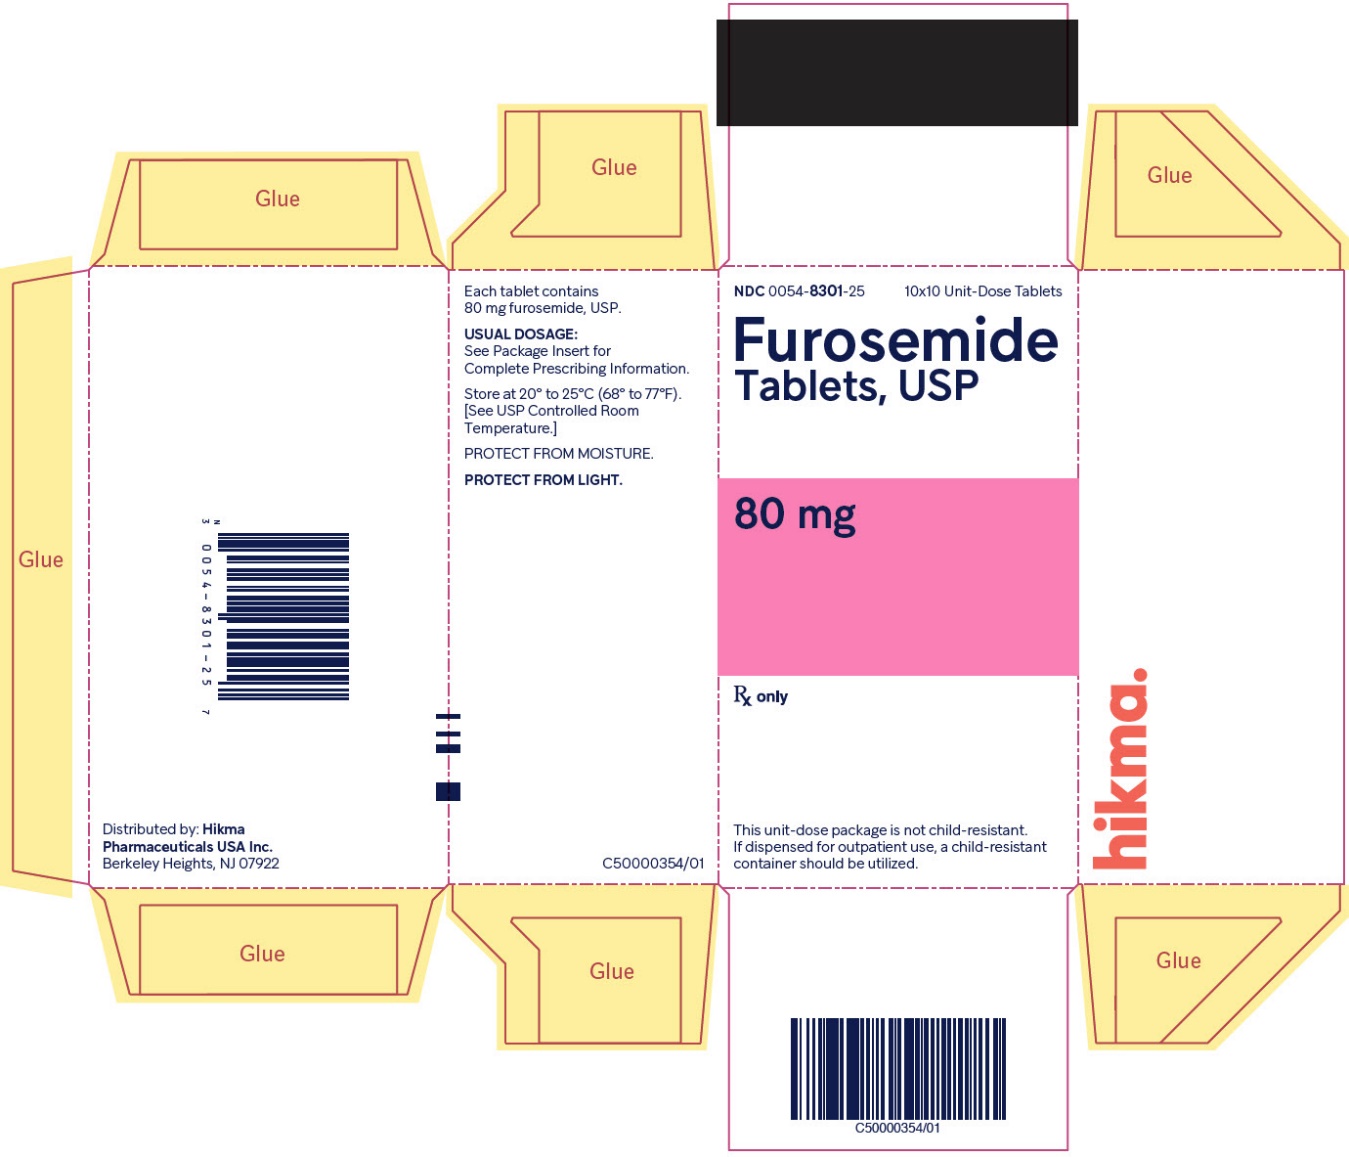 Furosemide Tablets USP, 80 mg (10x10 Unit-Dose Tablets) folding carton image